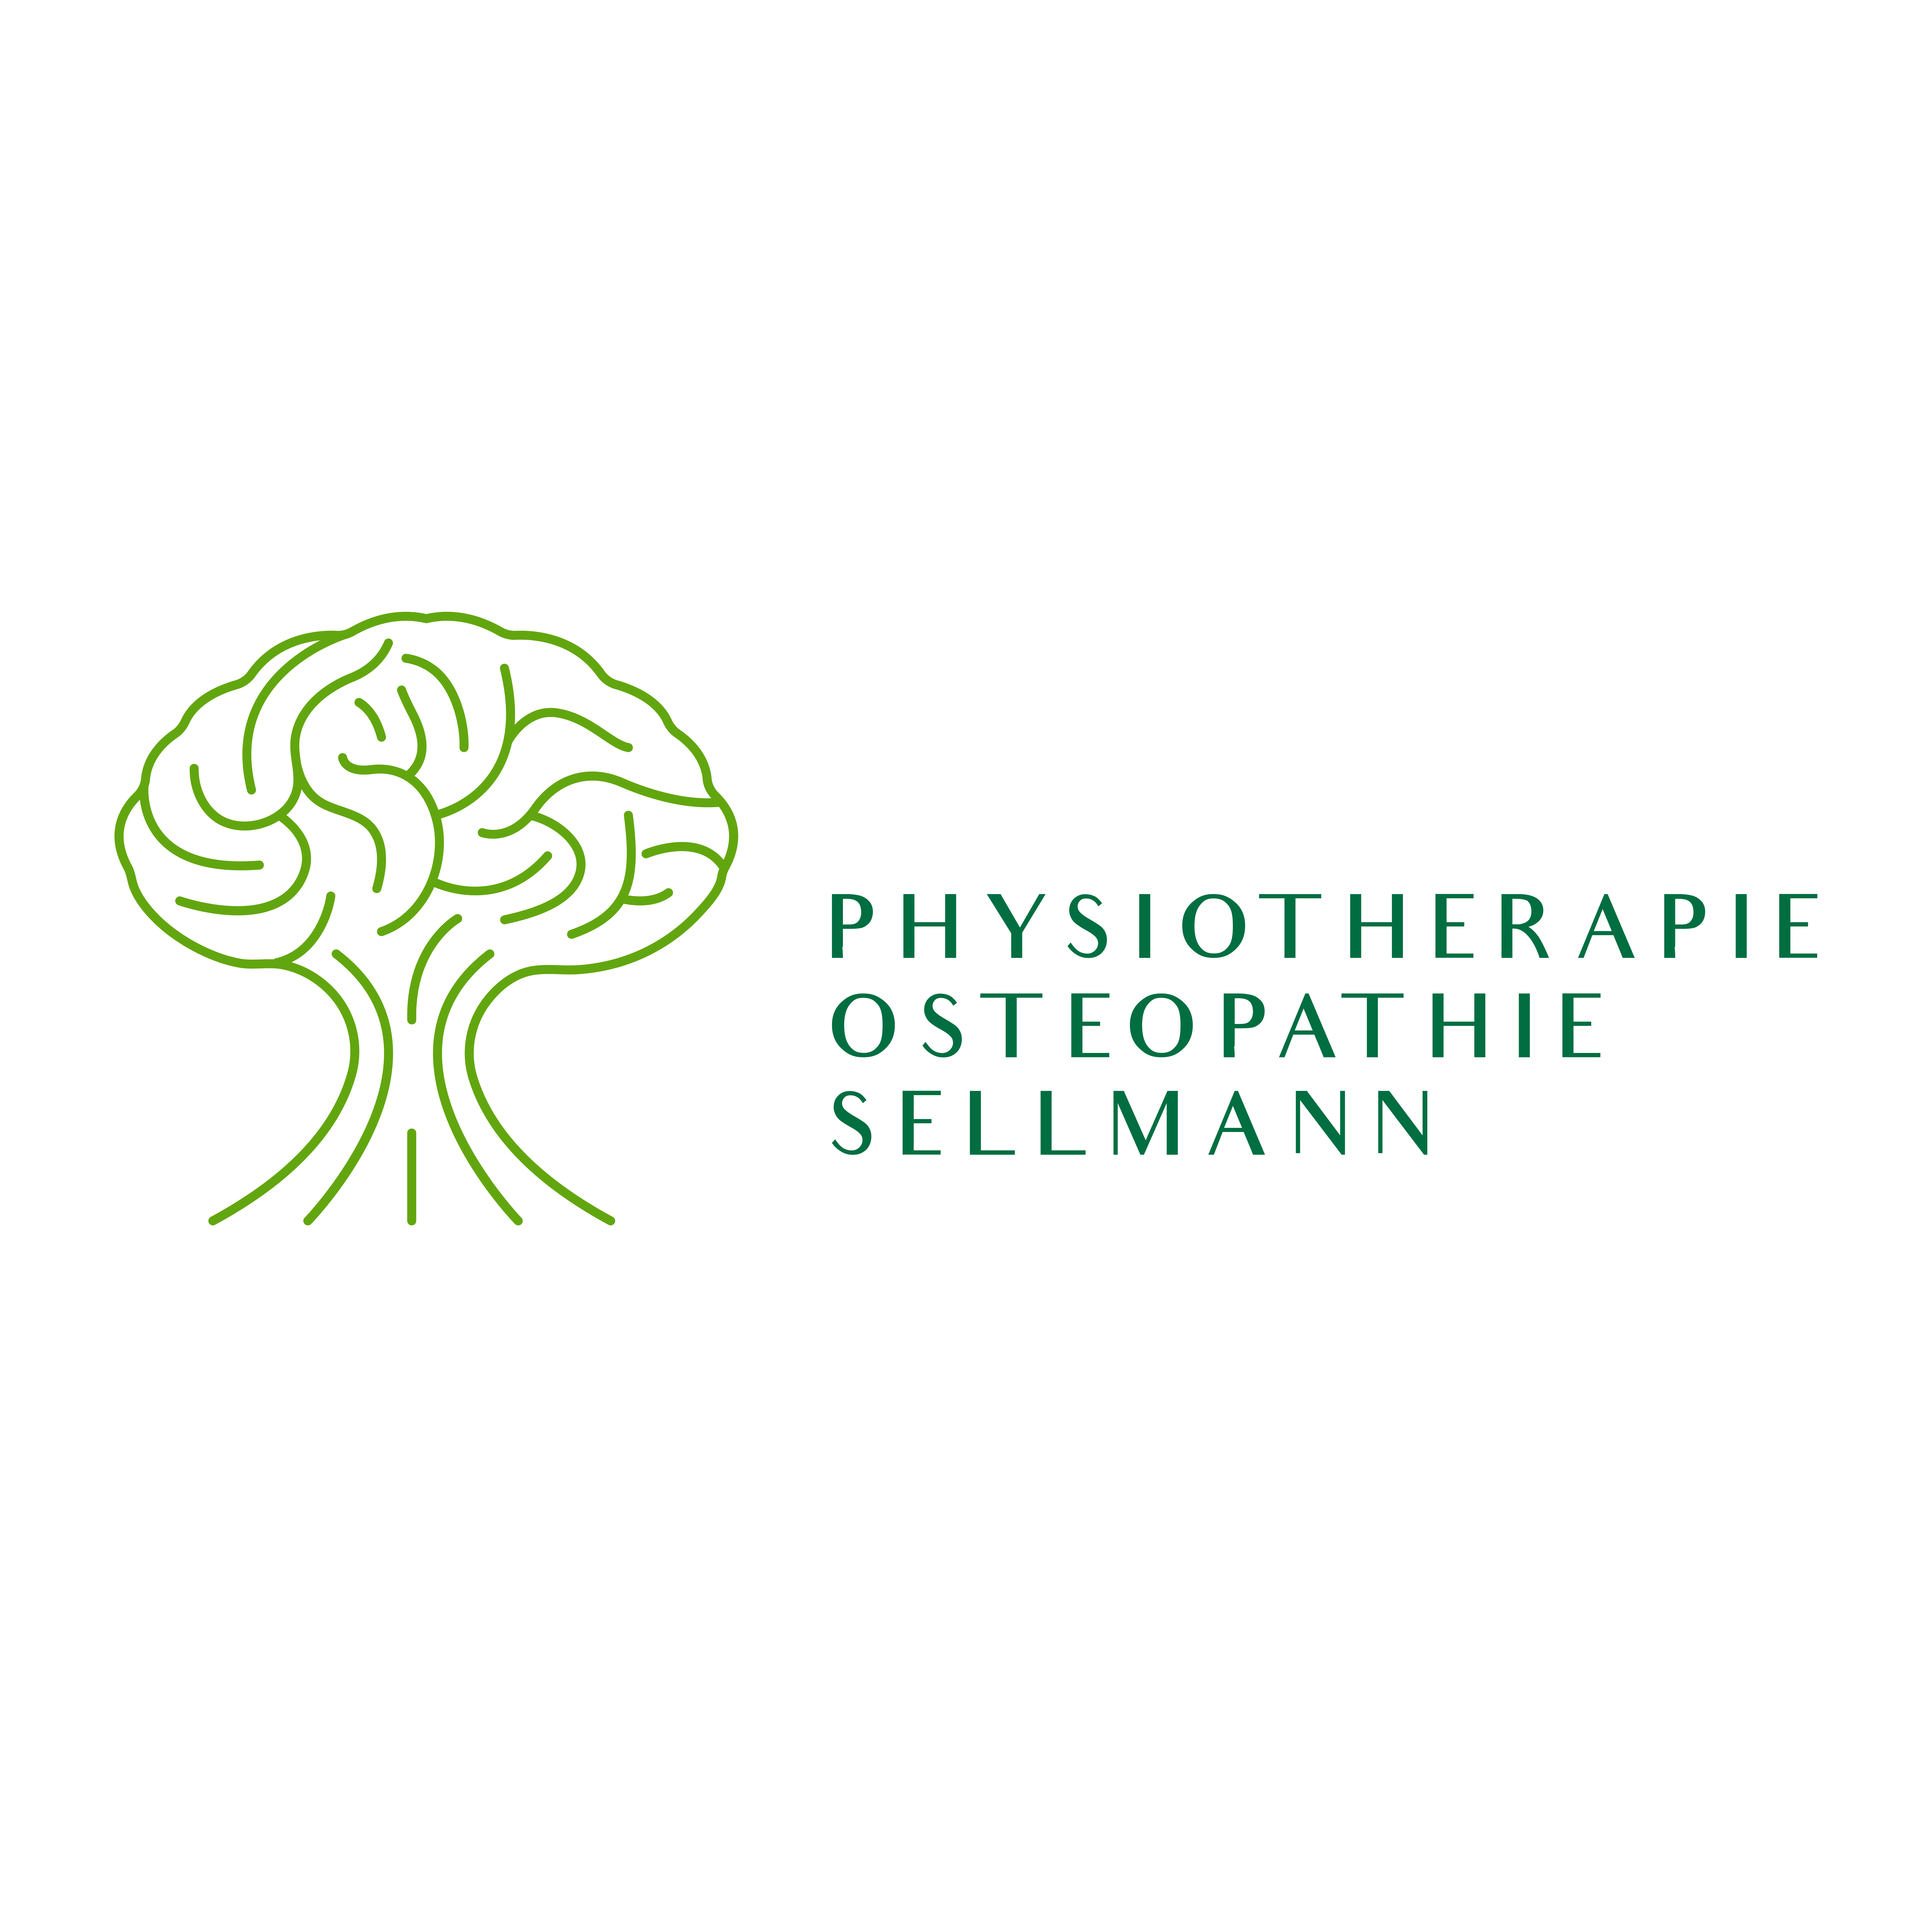 Physiotherapie & Osteopathie Sellmann